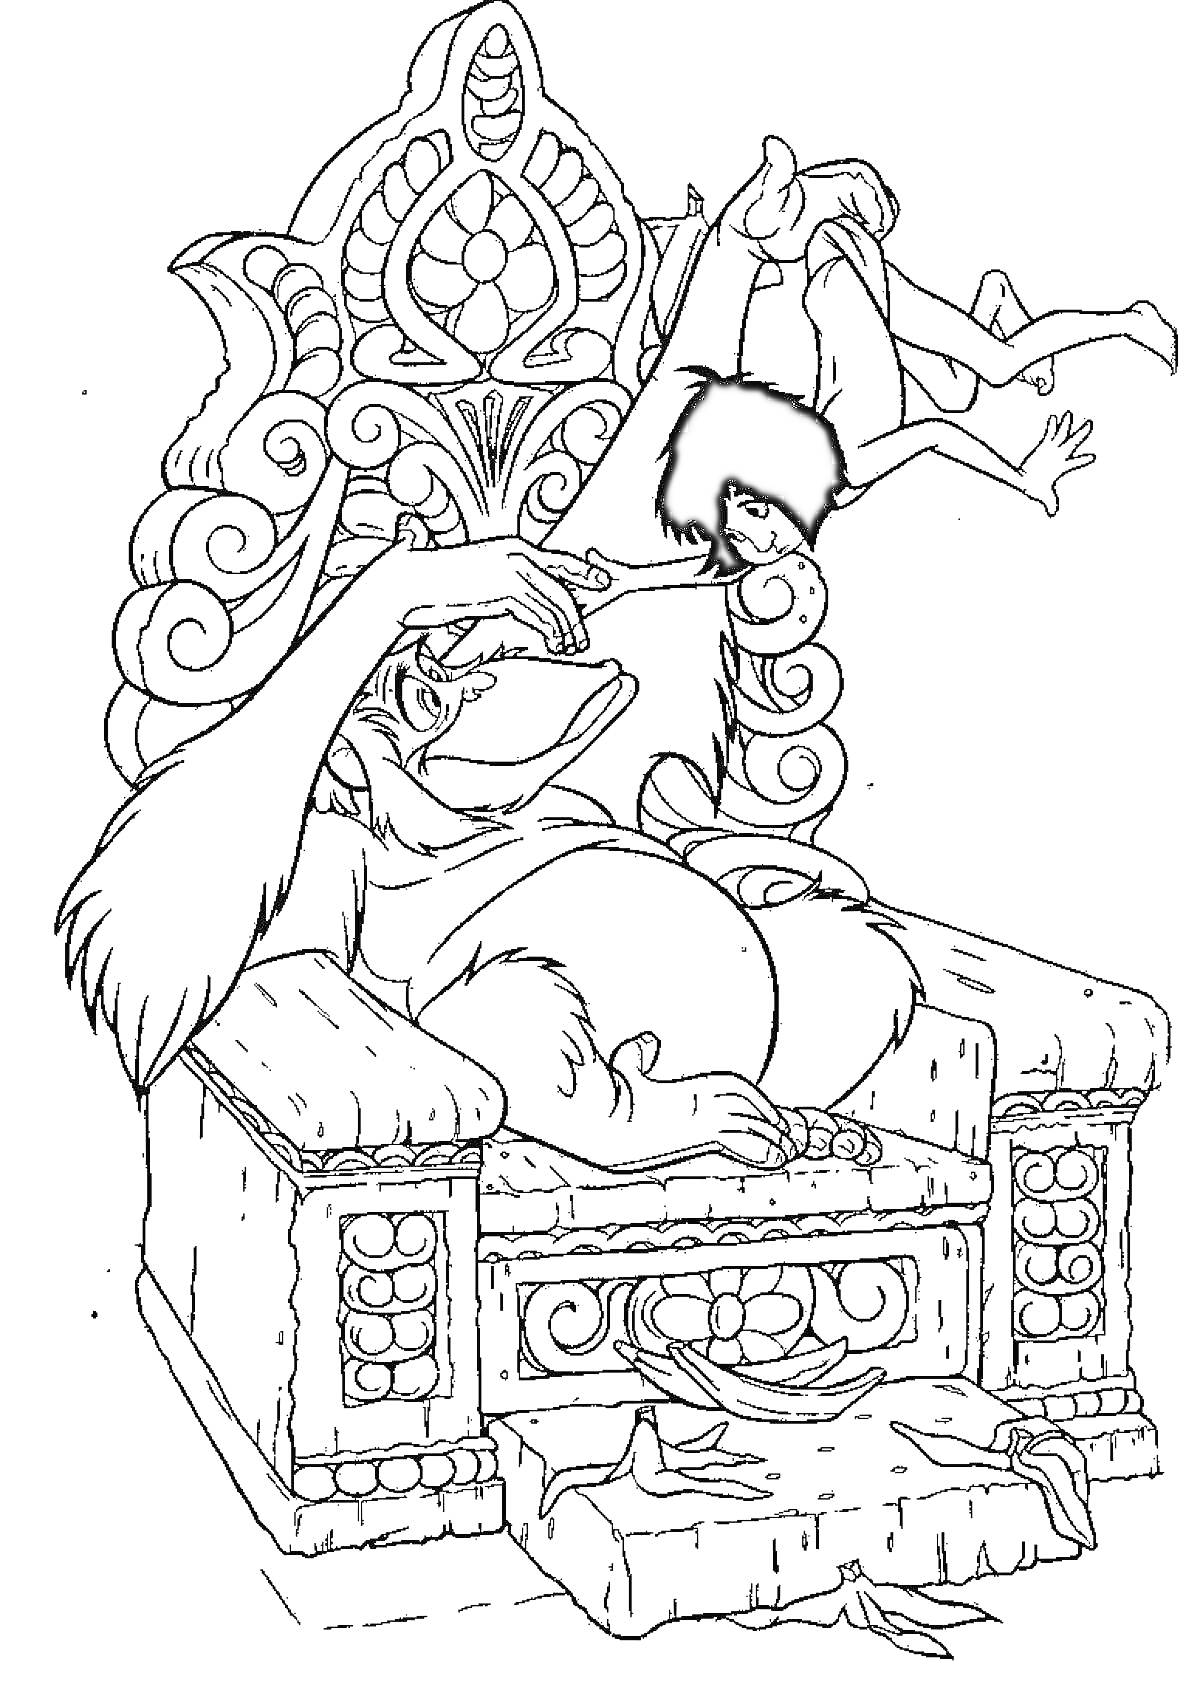 Король обезьян держит Маугли за руку на троне